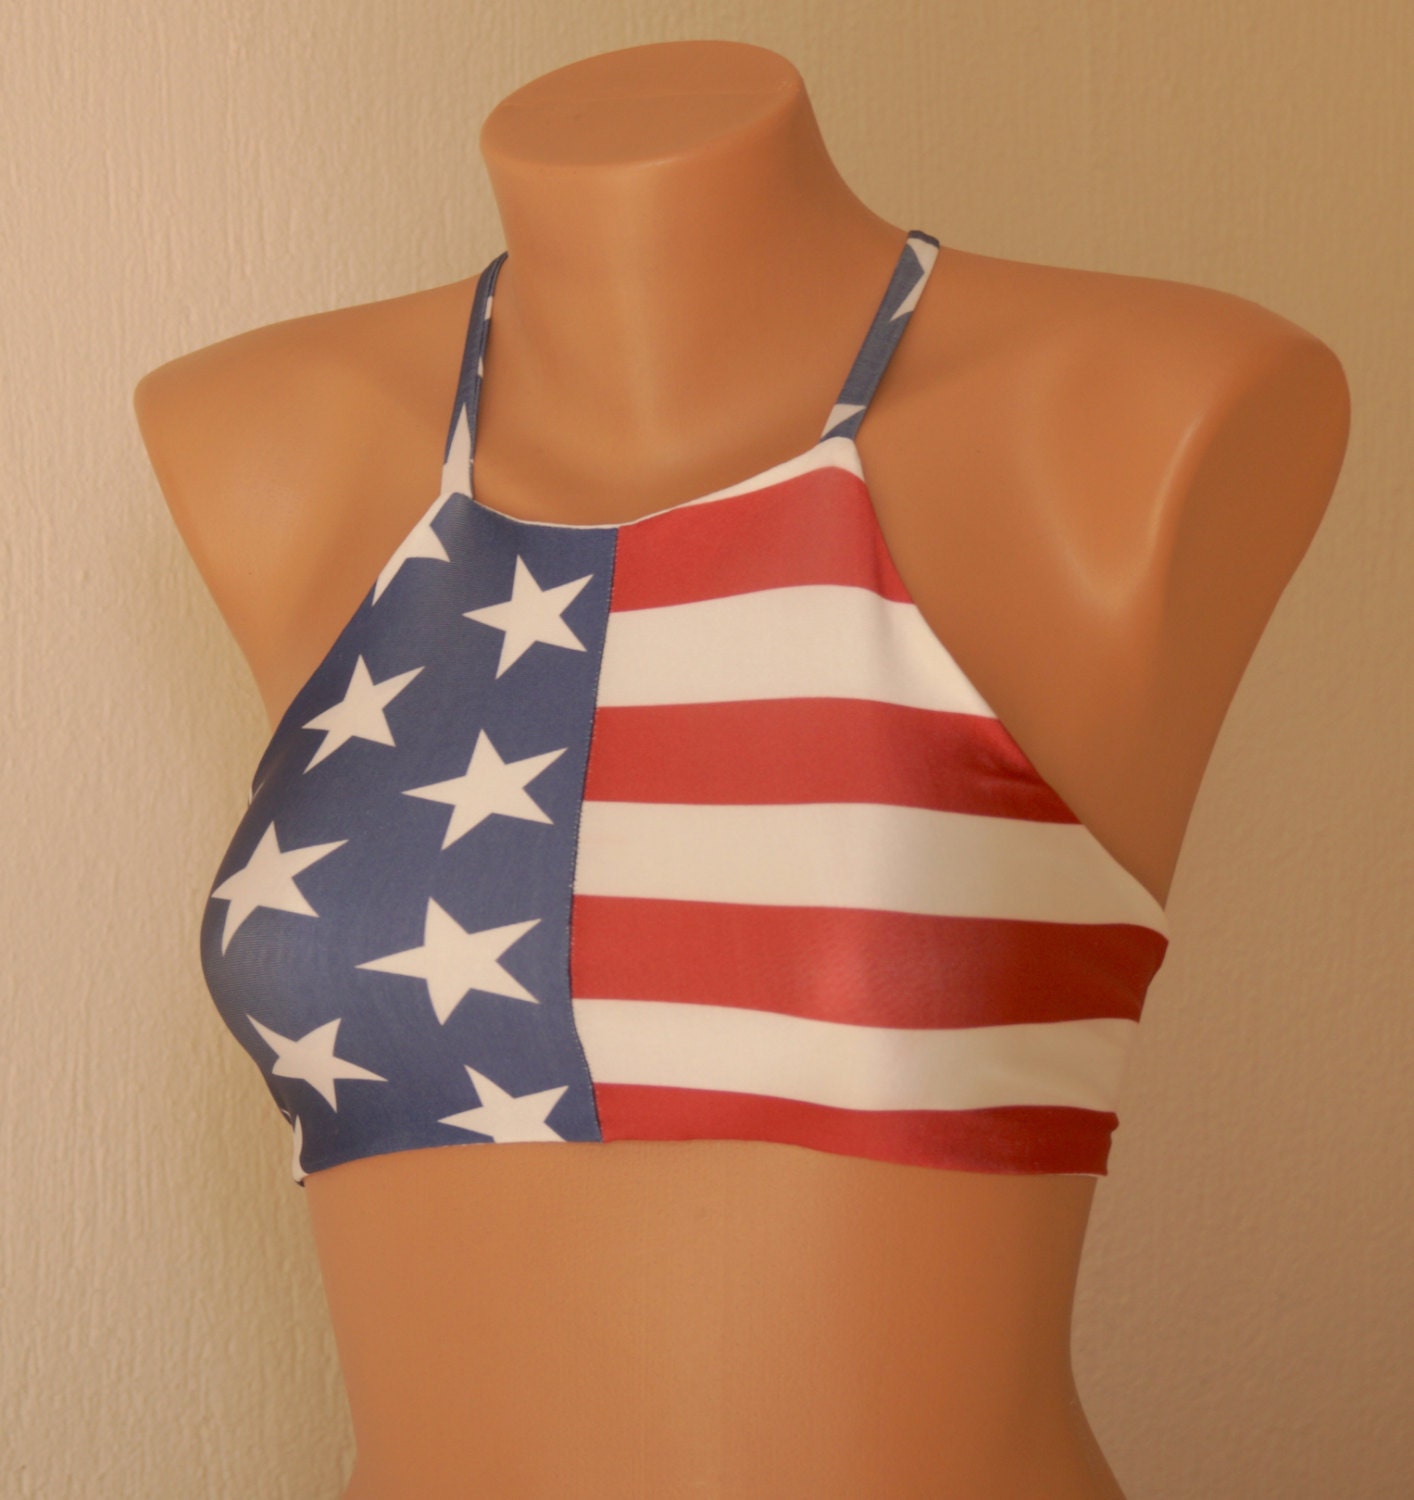 Swimsuits For All Women's Plus Size Longer Length Scarf Bandeau Tankini Top  12 Multi Stripe 